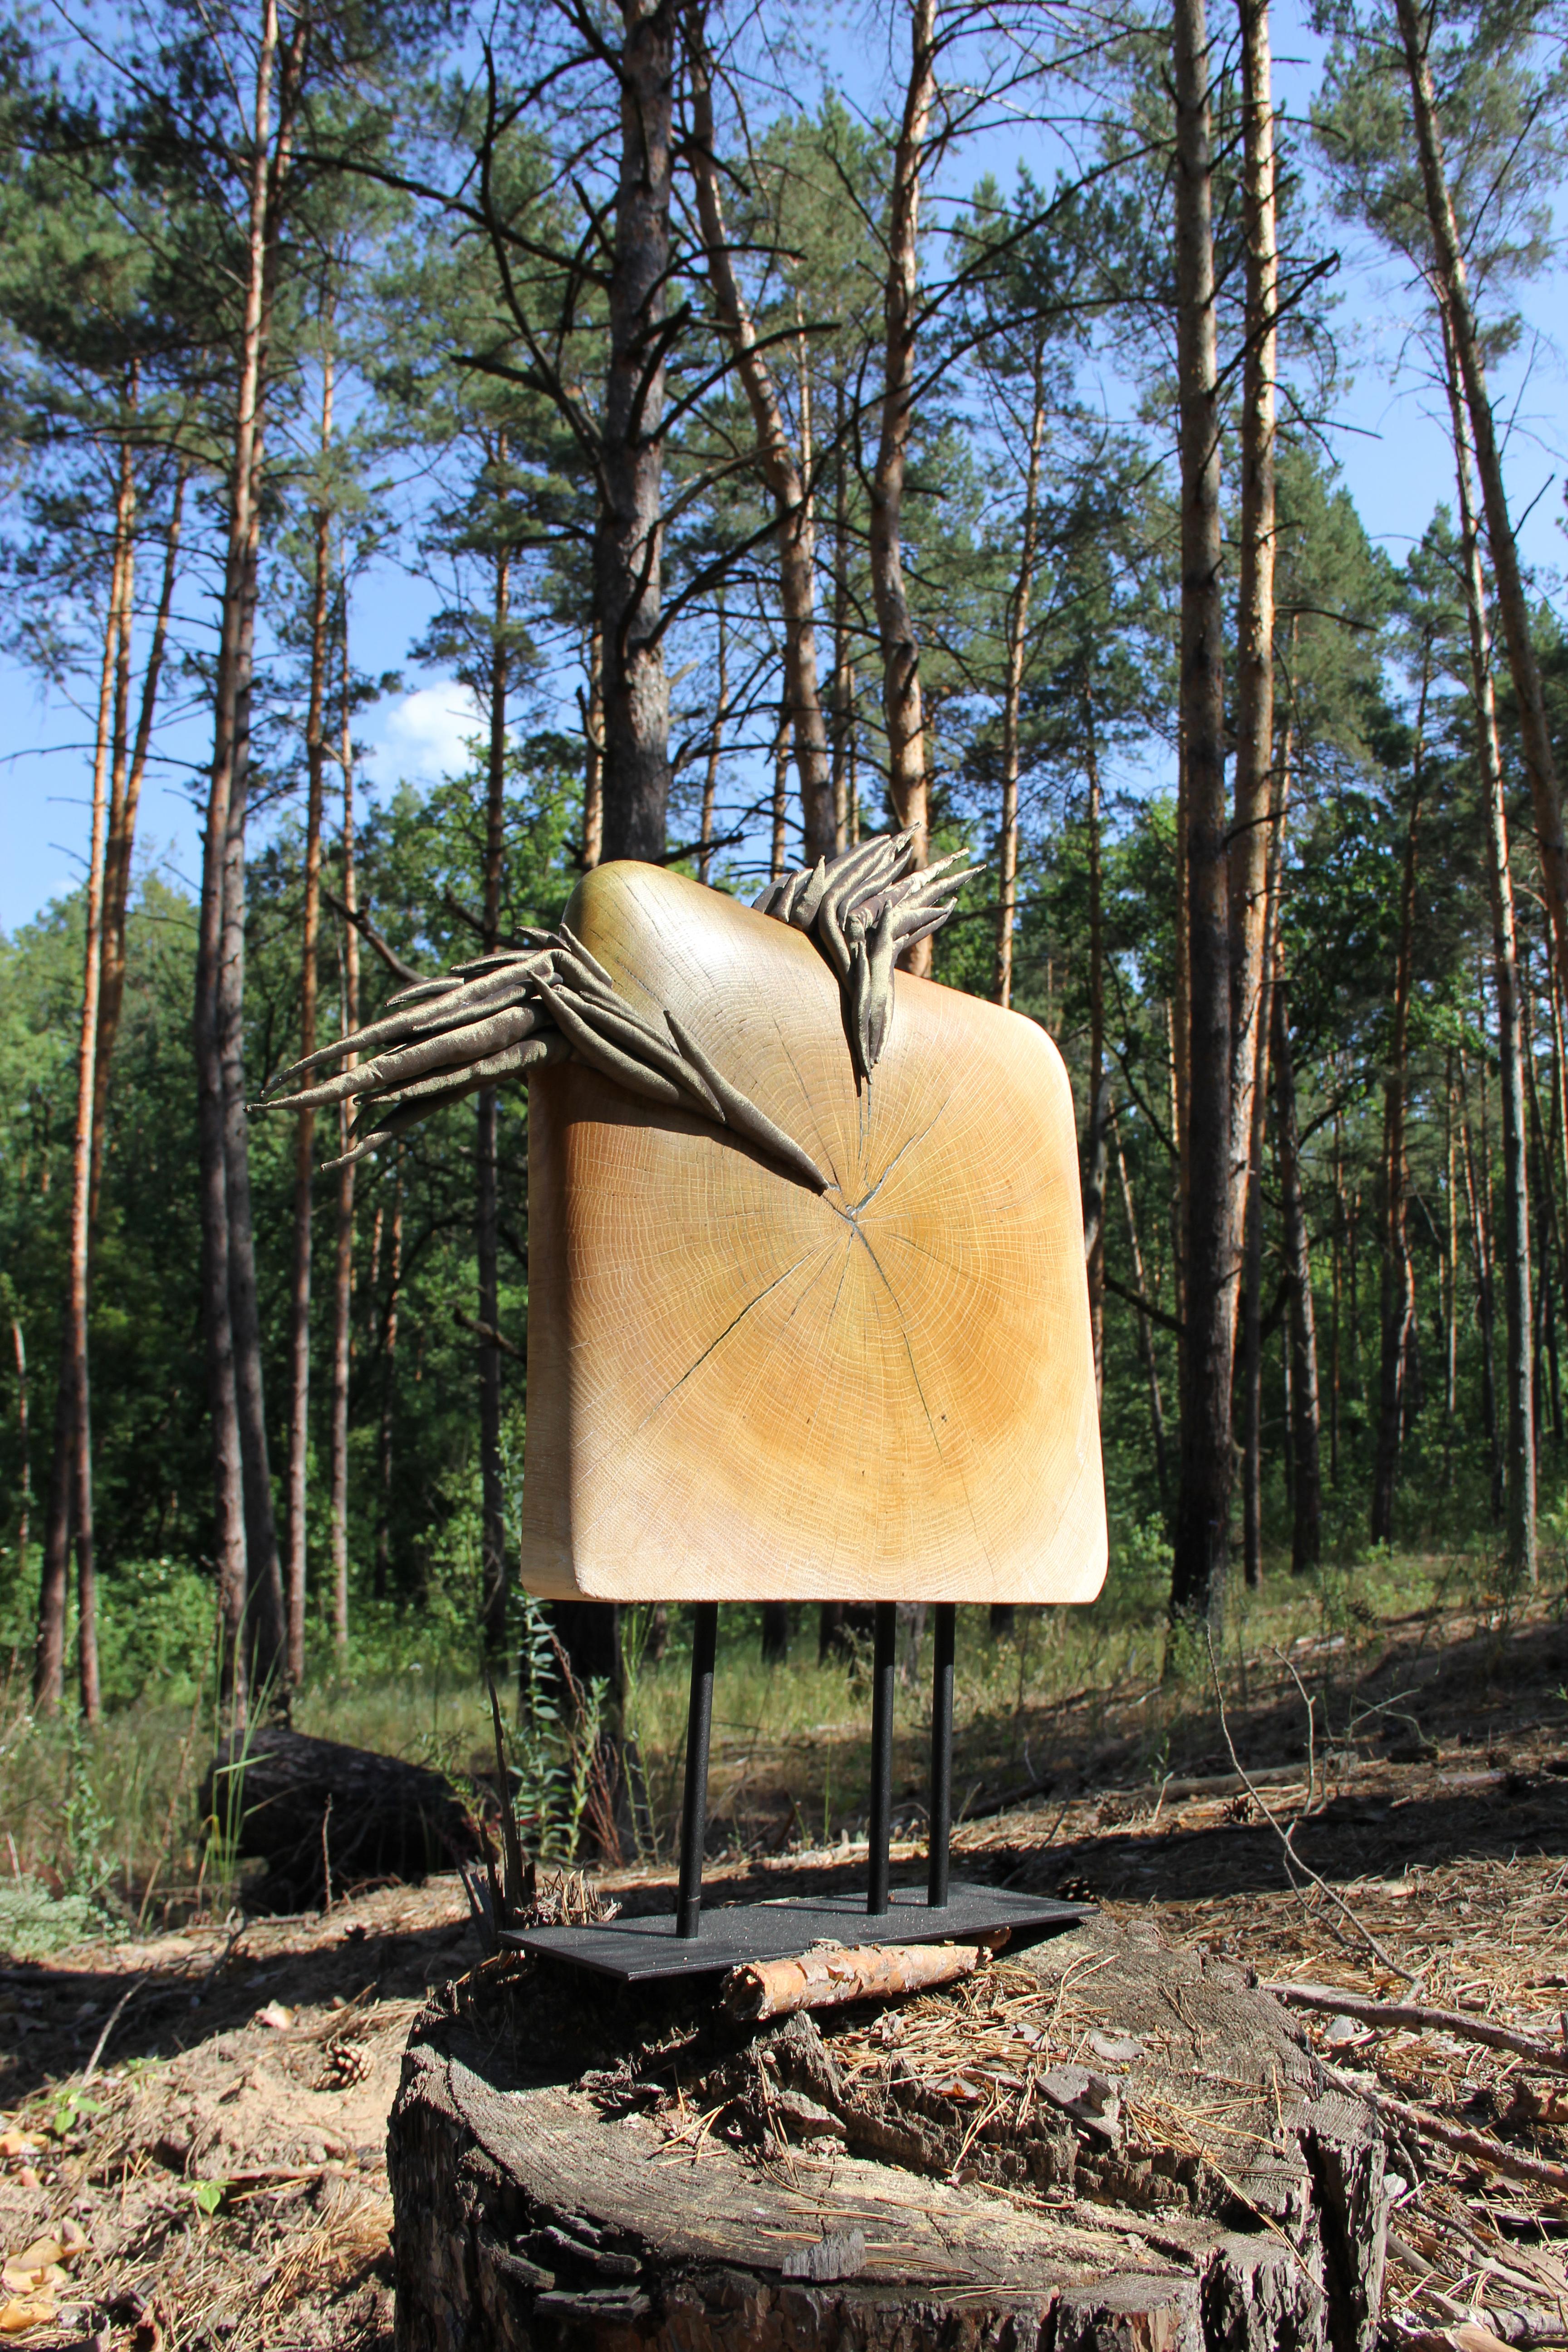 Tree of life series, Wings - Contemporary Sculpture by Olga Radionova